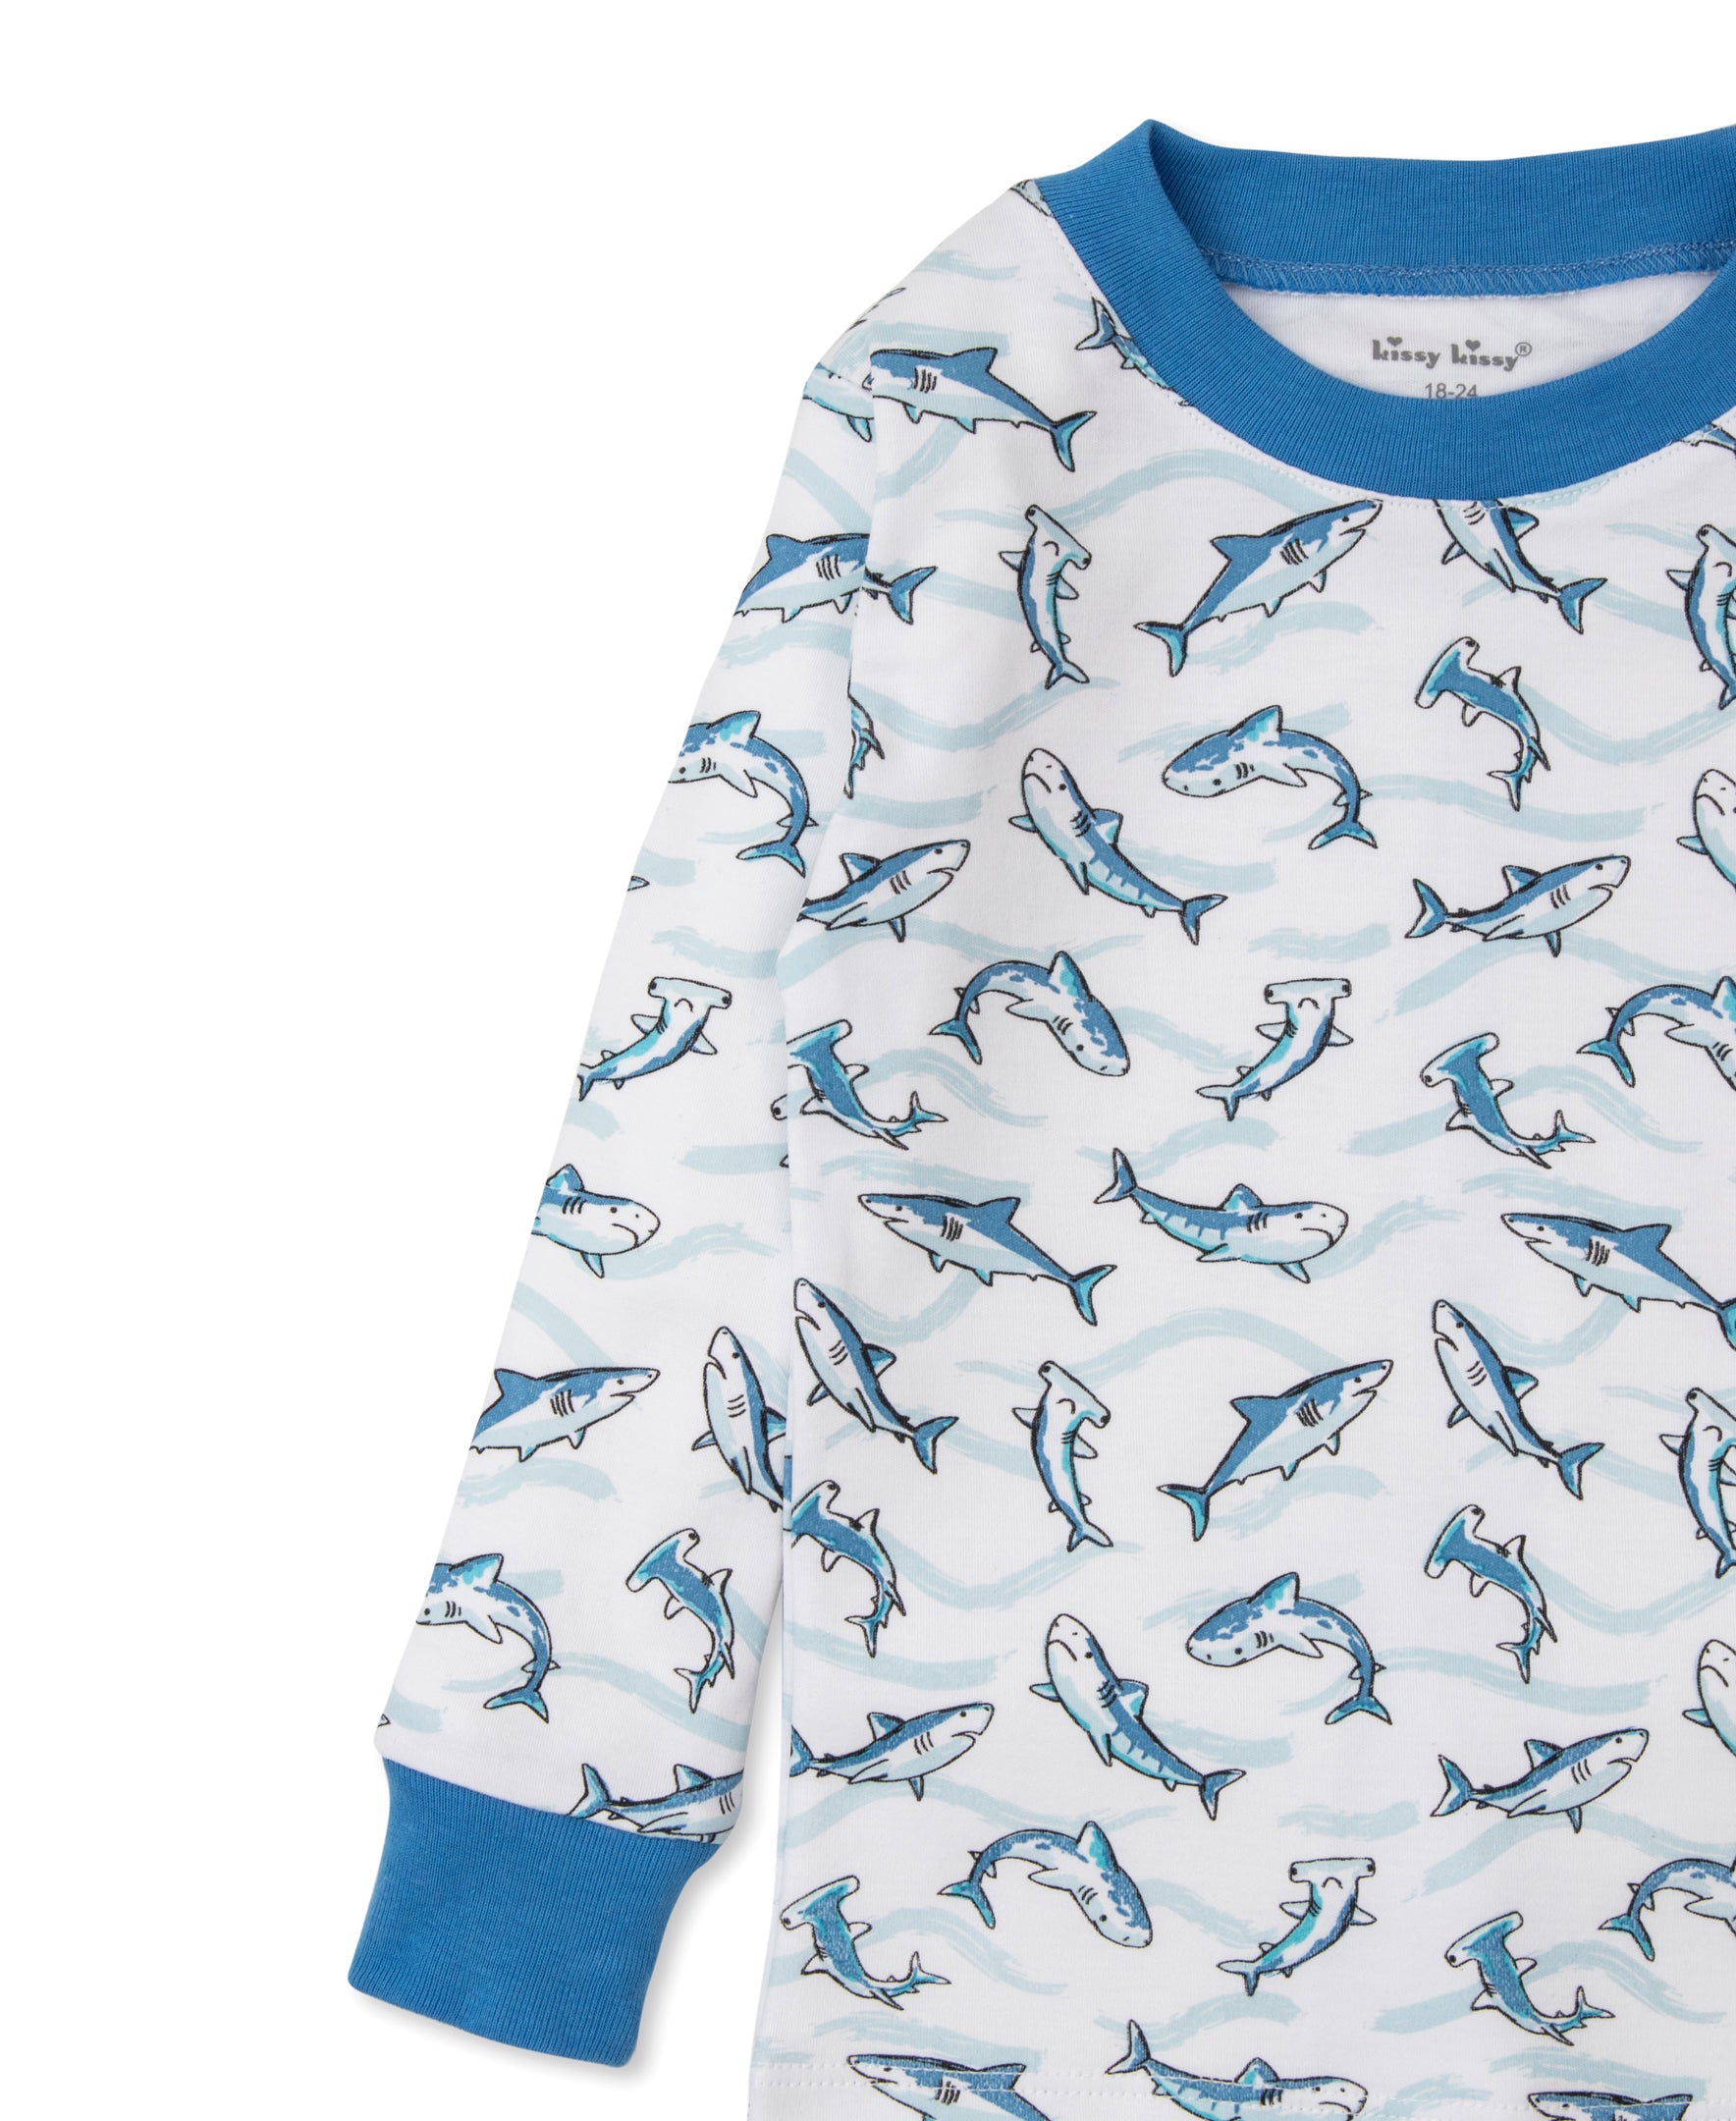 Swift Sharks Toddler Pajama Set - Kissy Kissy